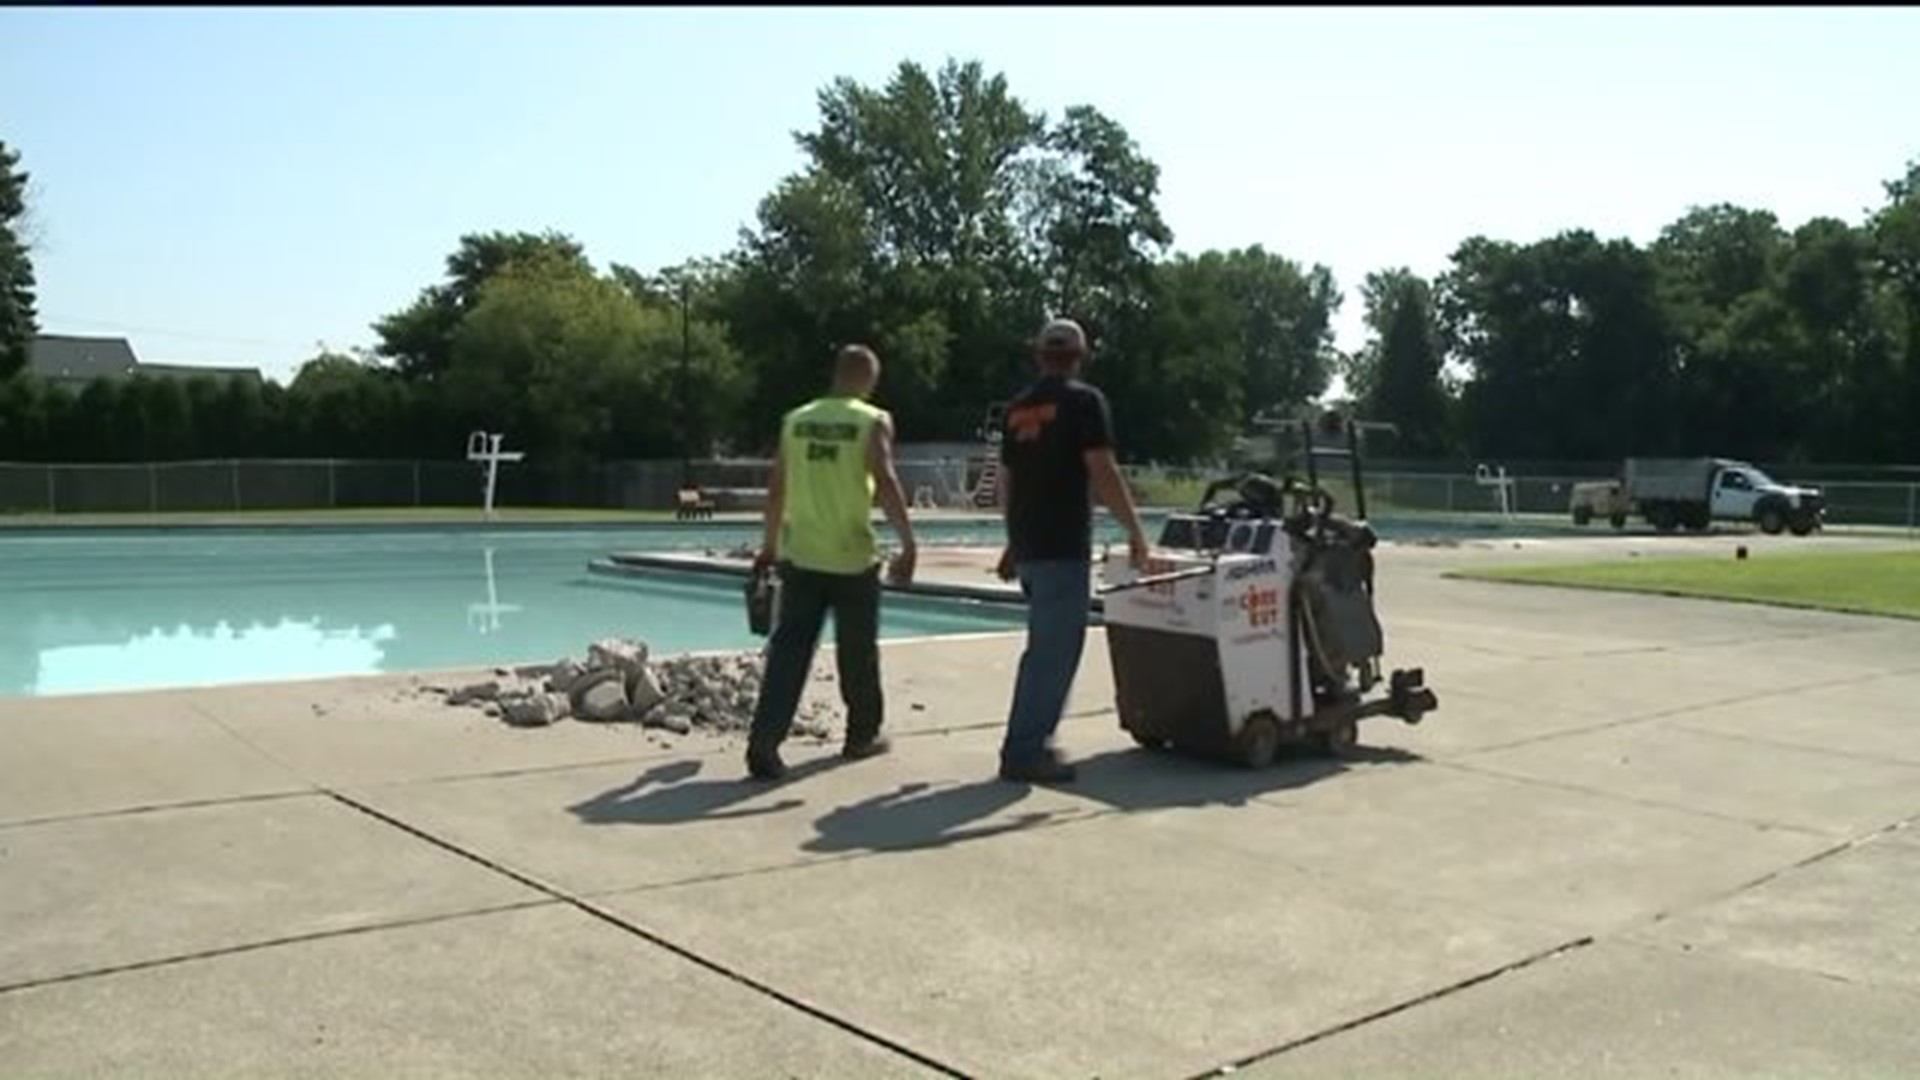 Community Pool Renovation Underway in Kingston